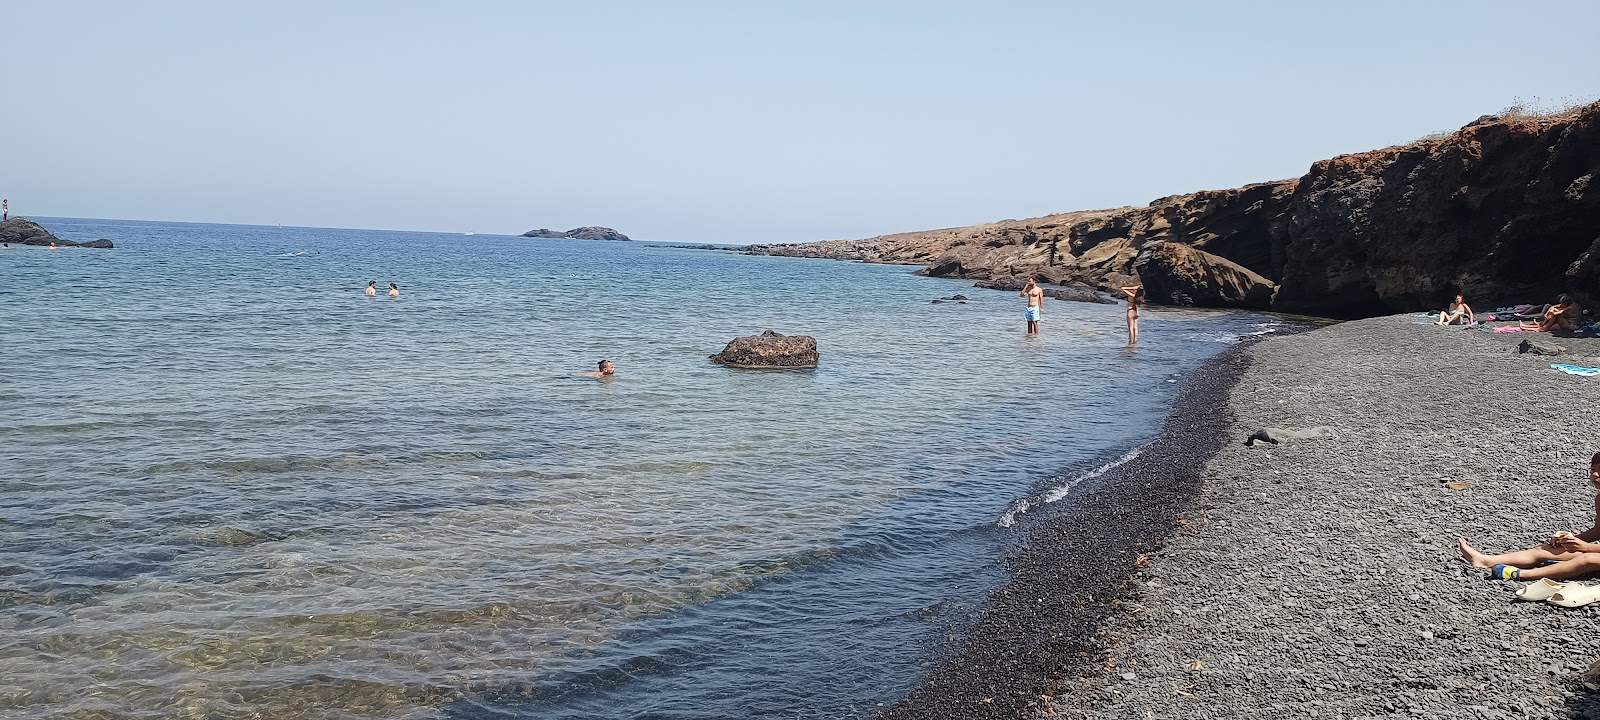 Foto av Cala Sidoti med rymlig strand